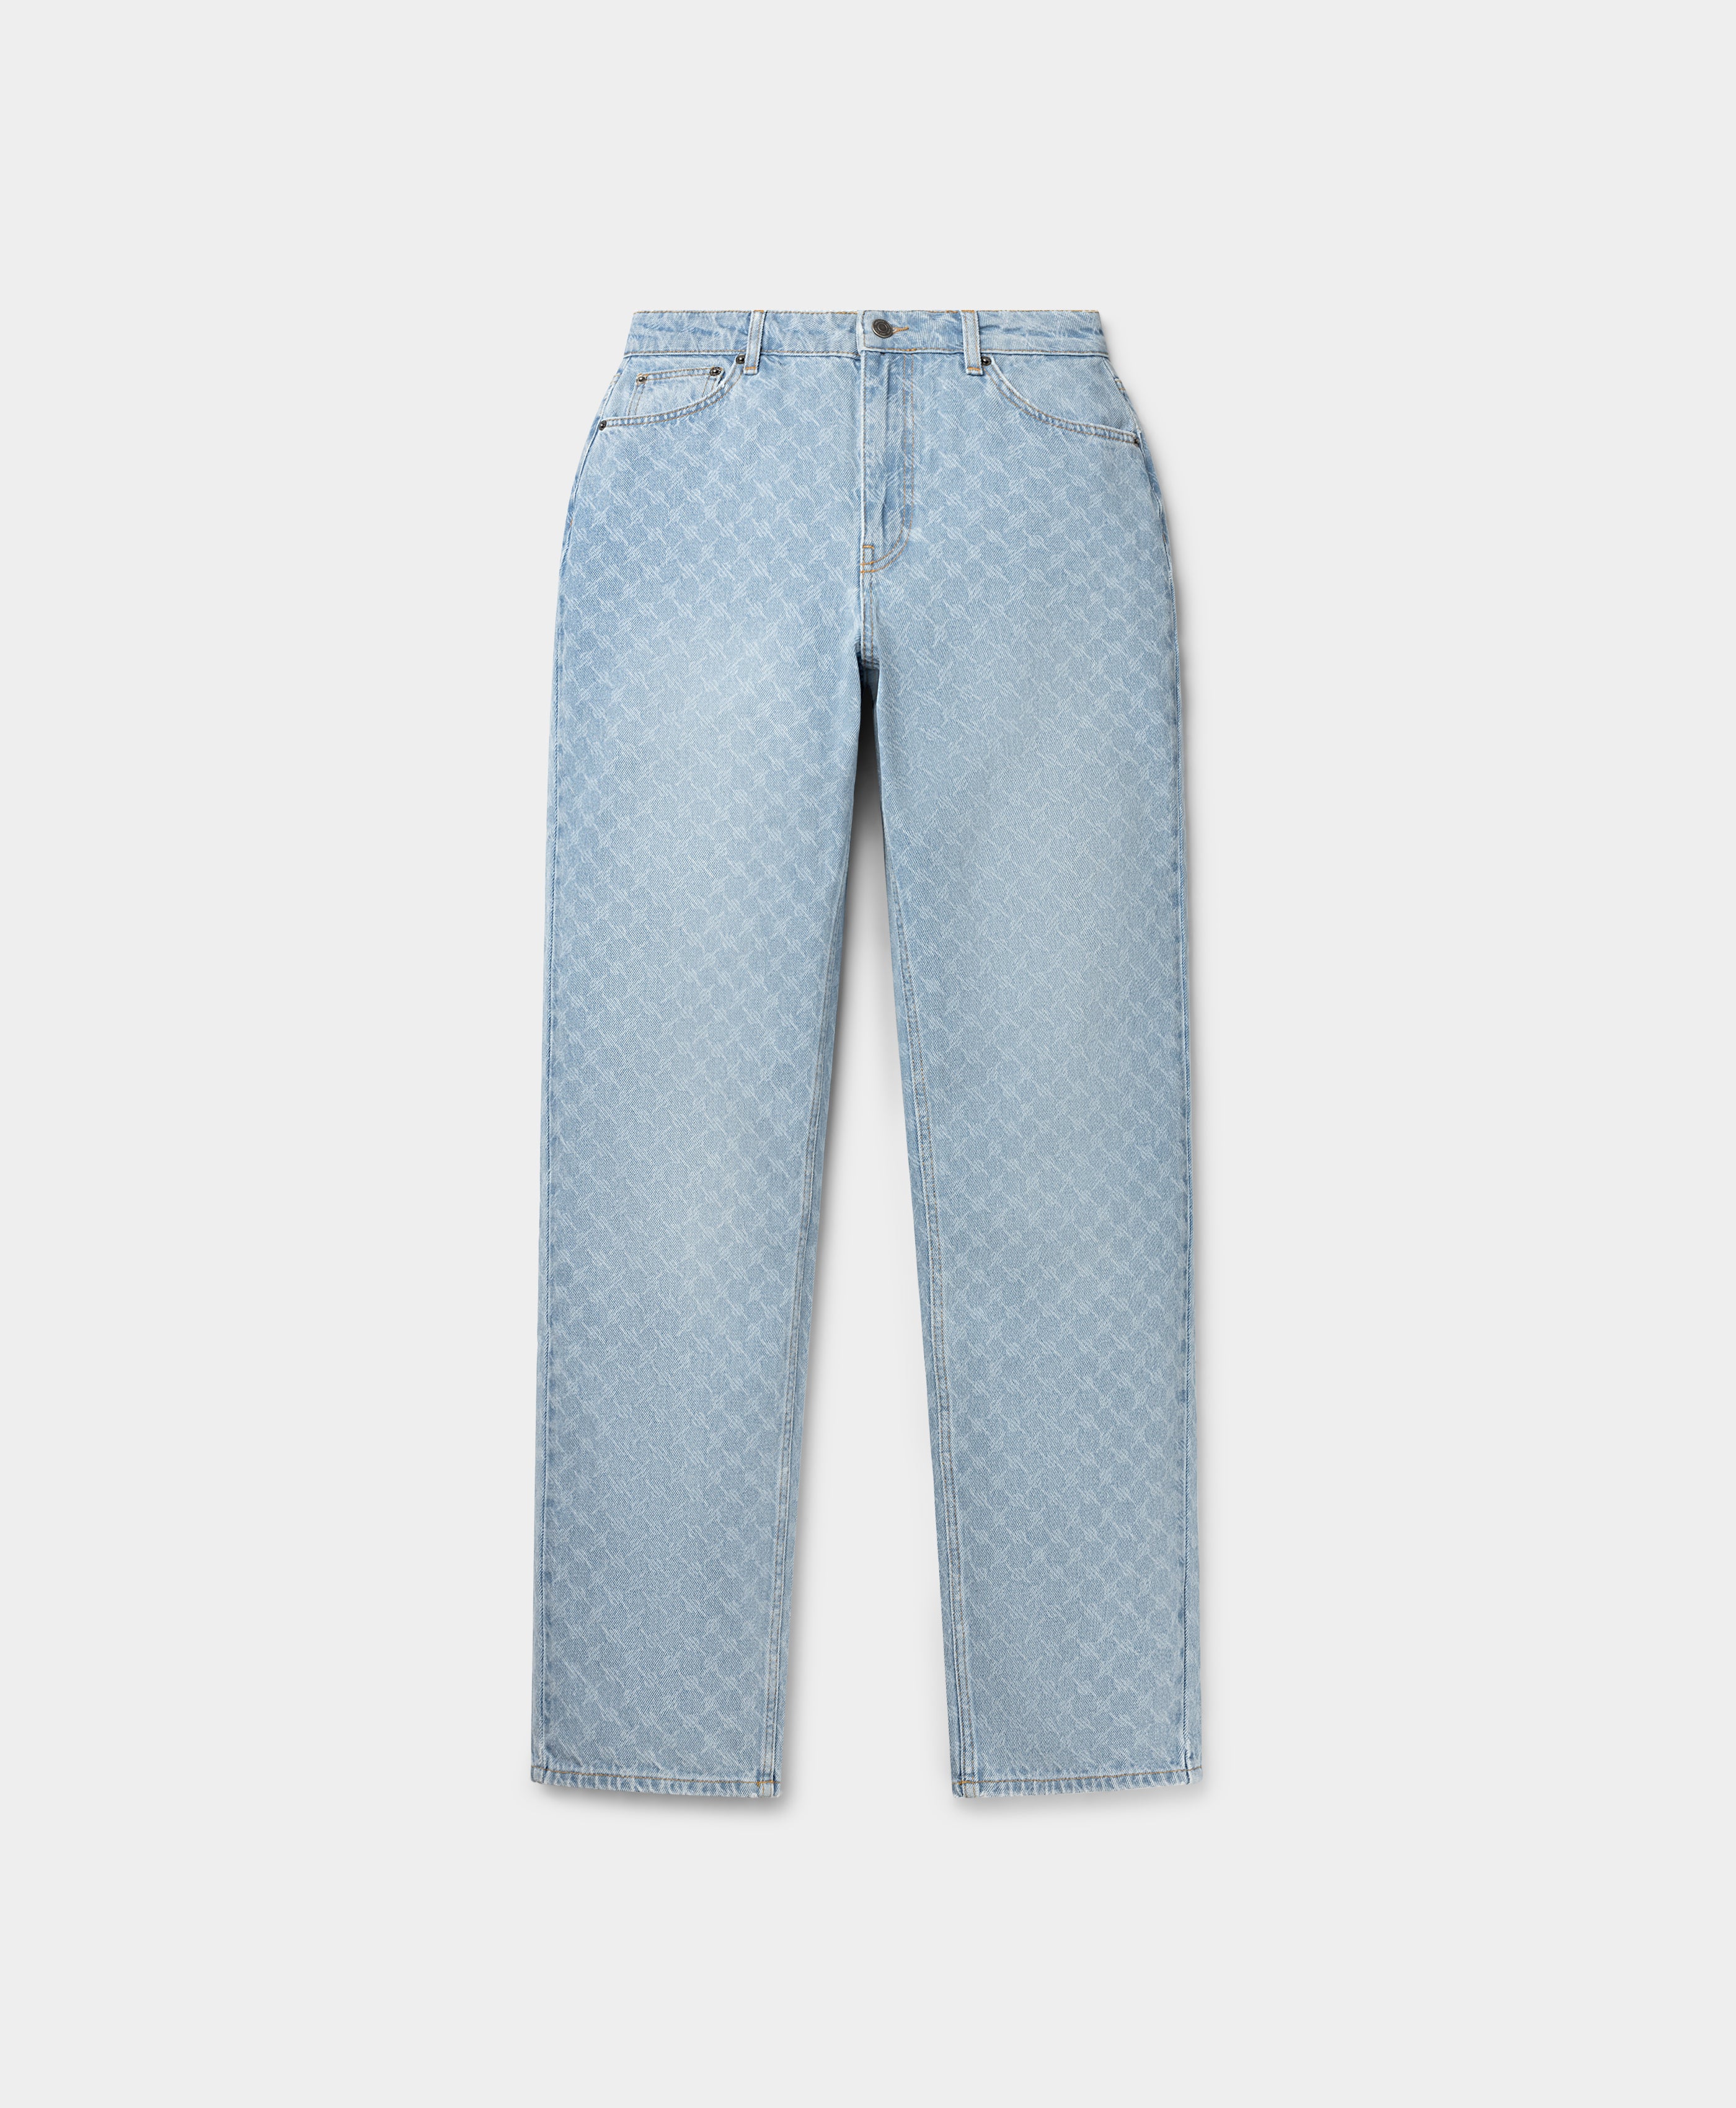 DP - Mid Blue Avery Monogram Jeans - Packshot - Front 